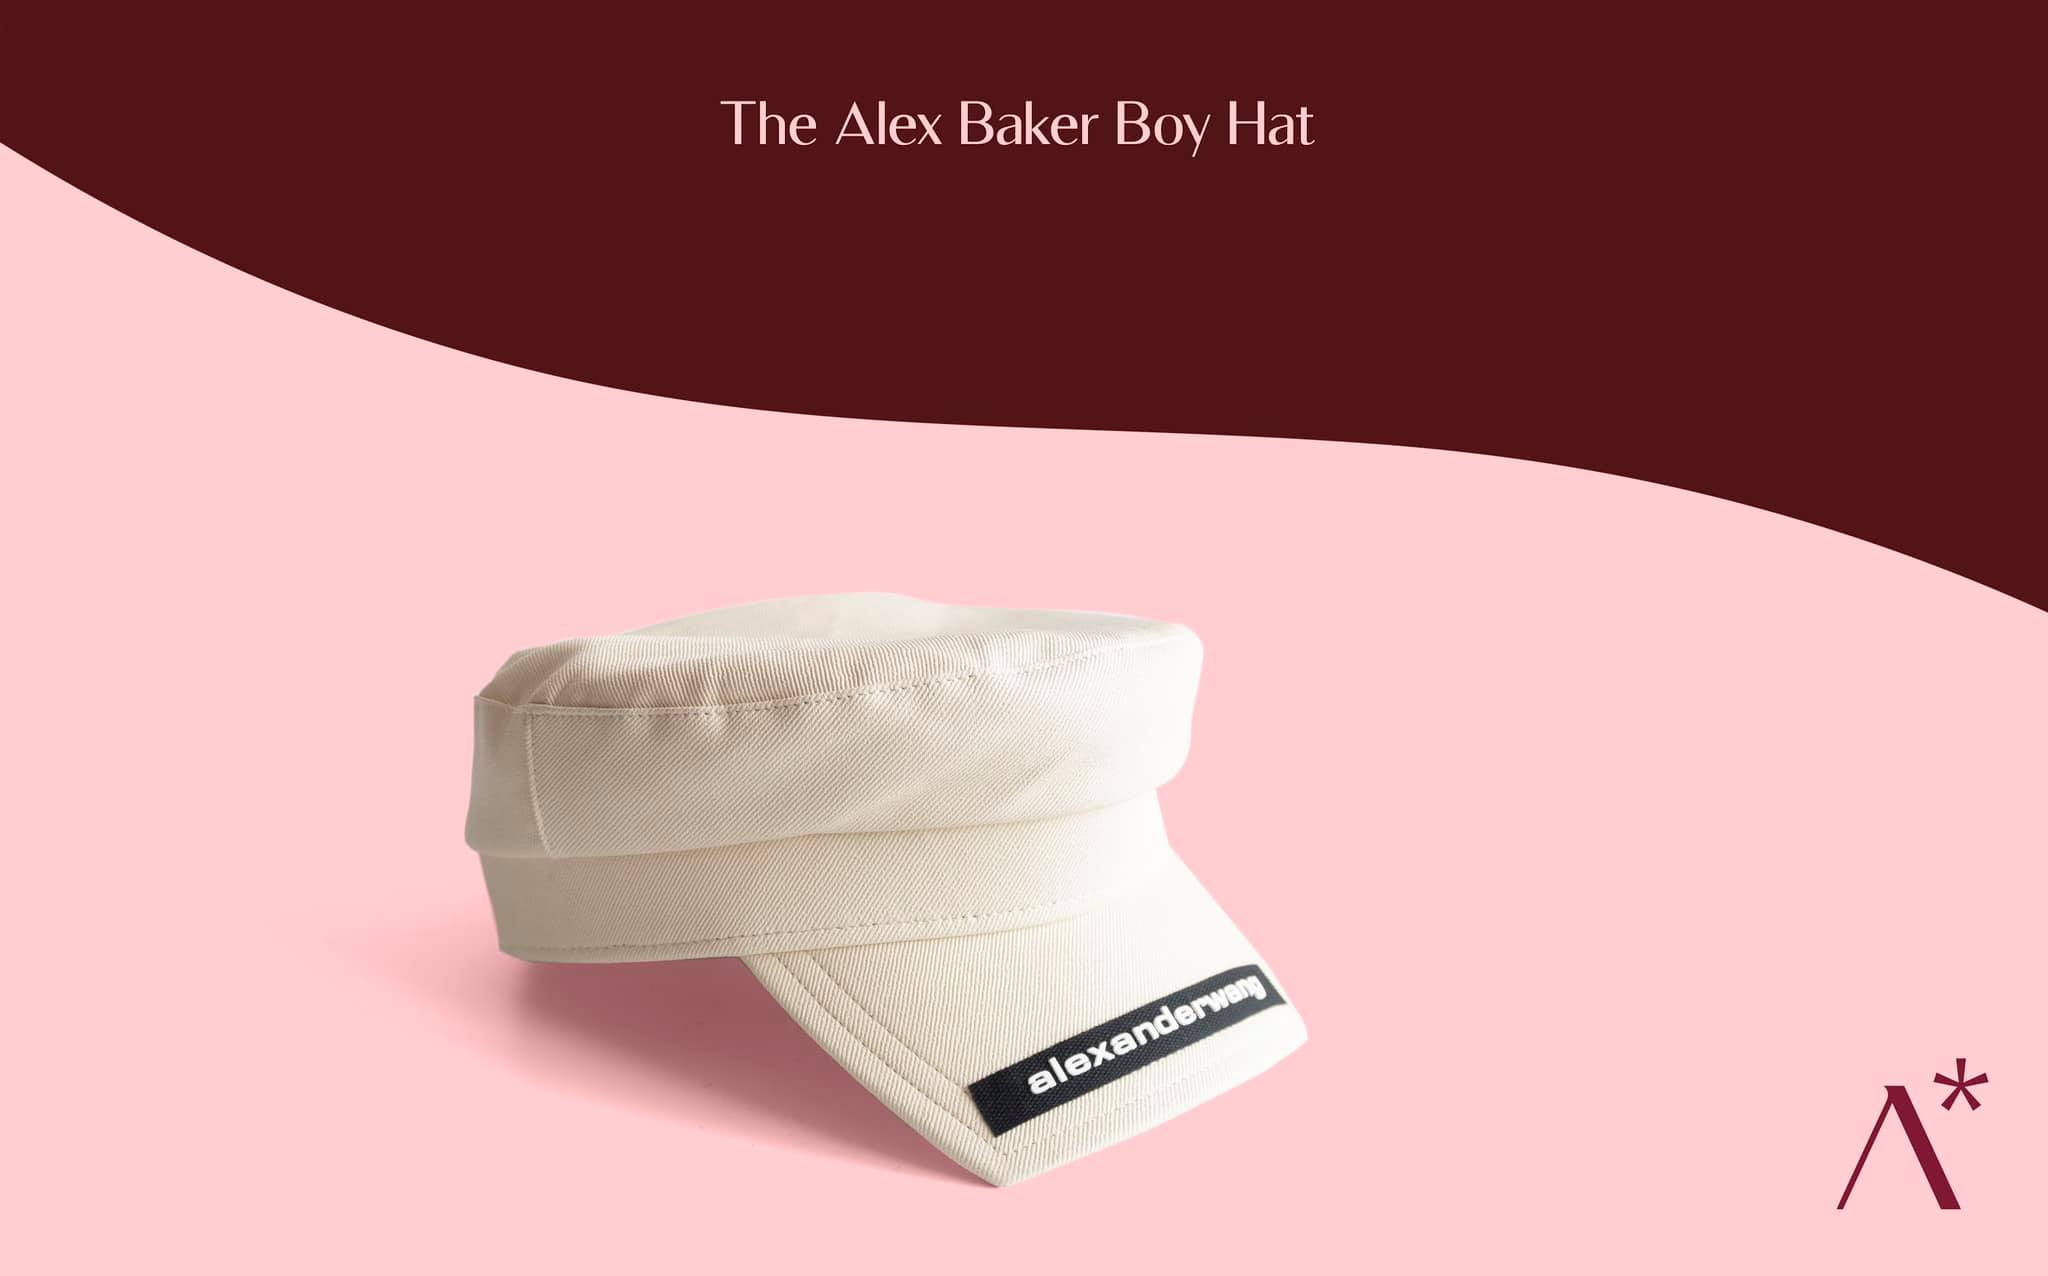 The Alex Baker Boy Hat